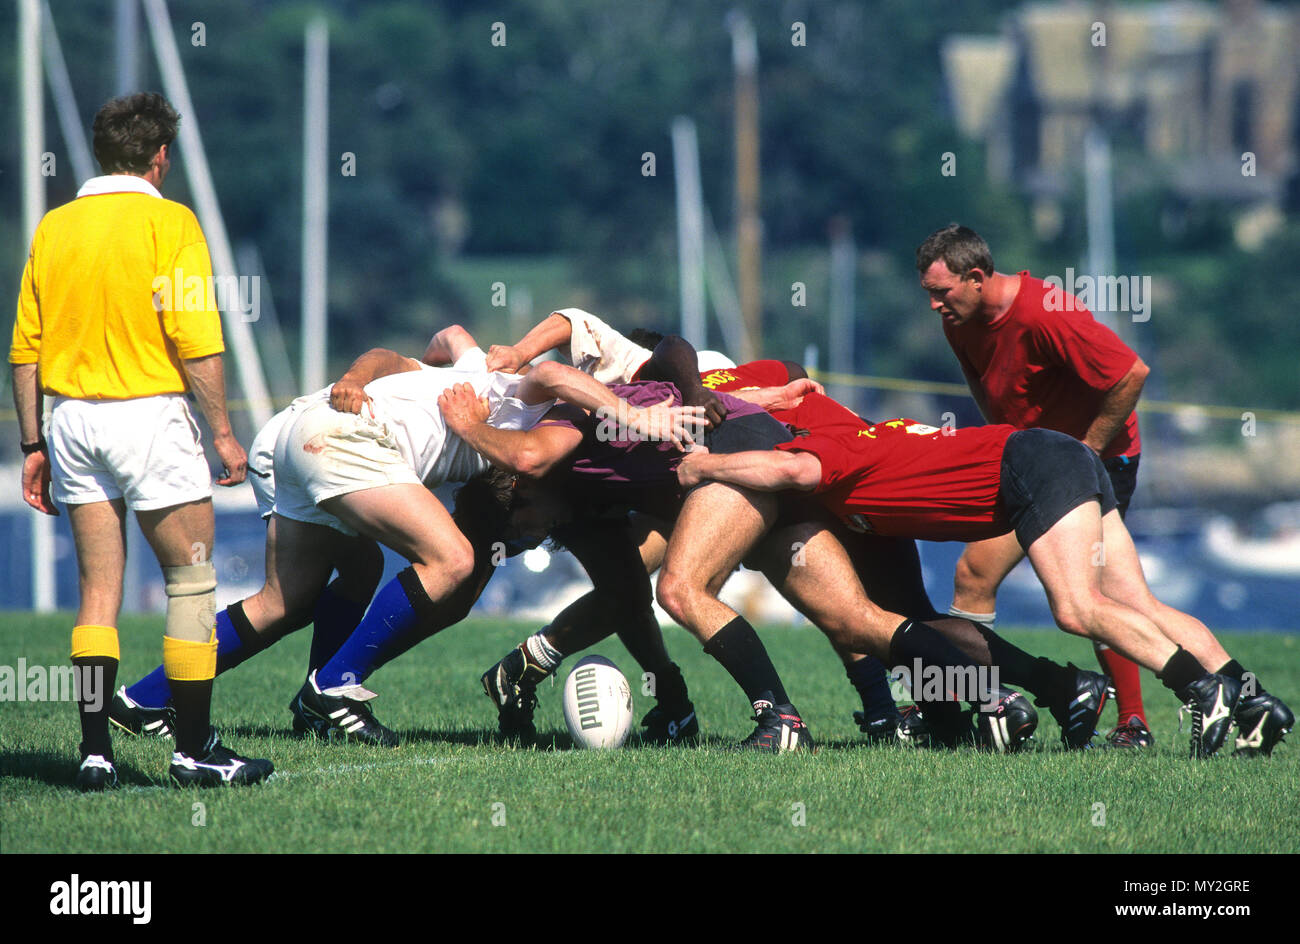 A rugby match underway in Newport, Rhode Island, USA Stock Photo